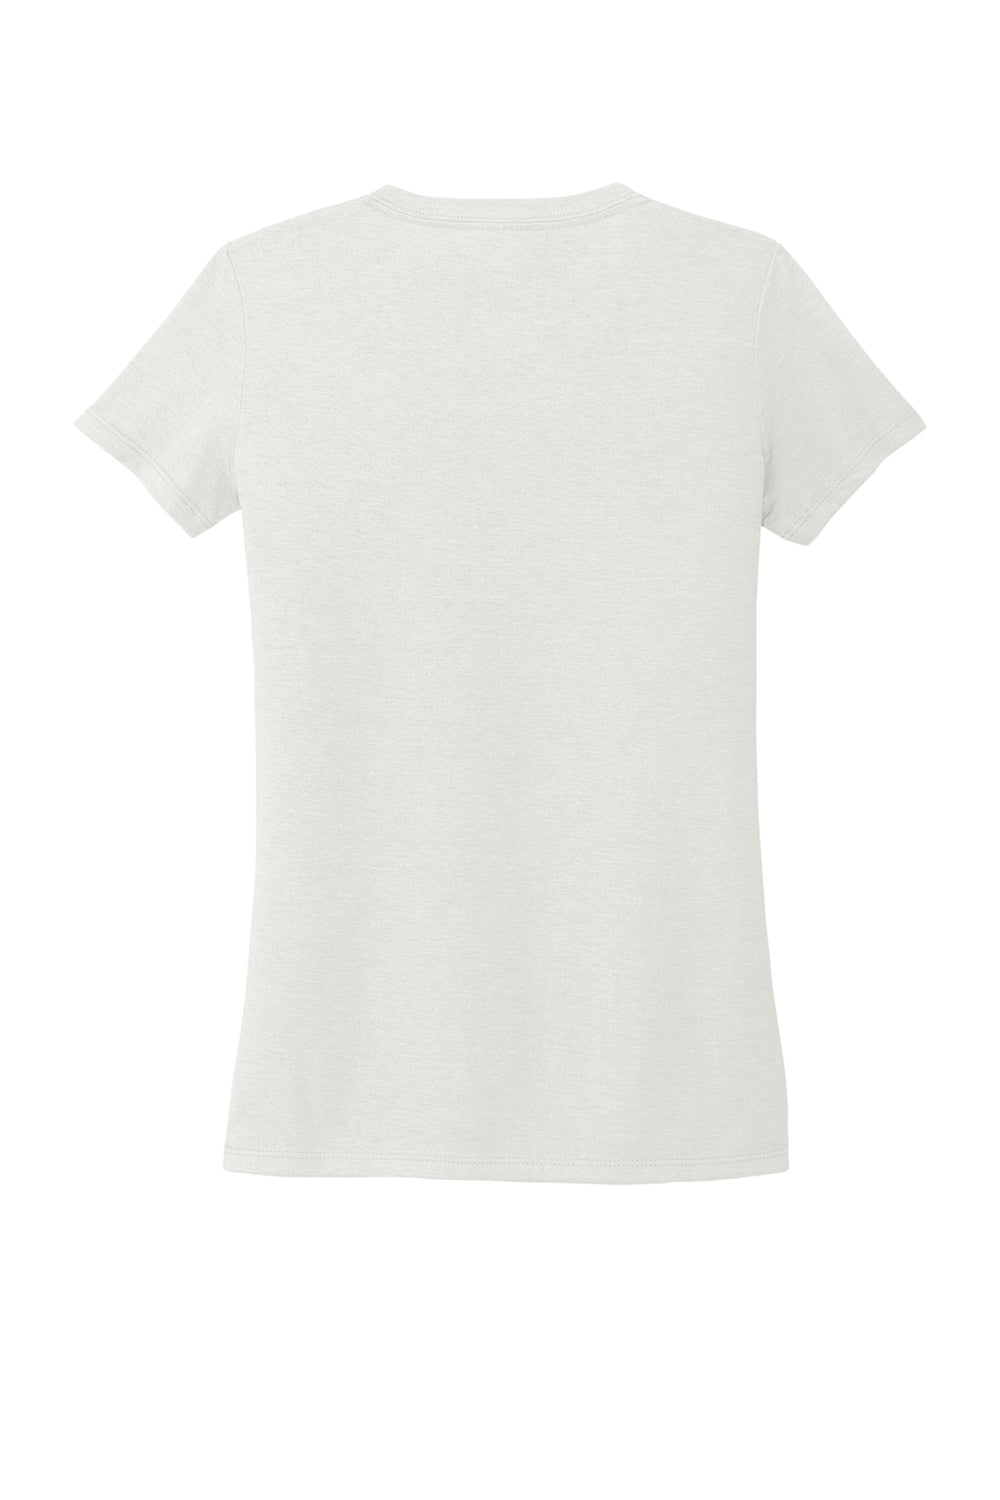 Allmade AL2018 Womens Short Sleeve V-Neck T-Shirt Fairly White Flat Back